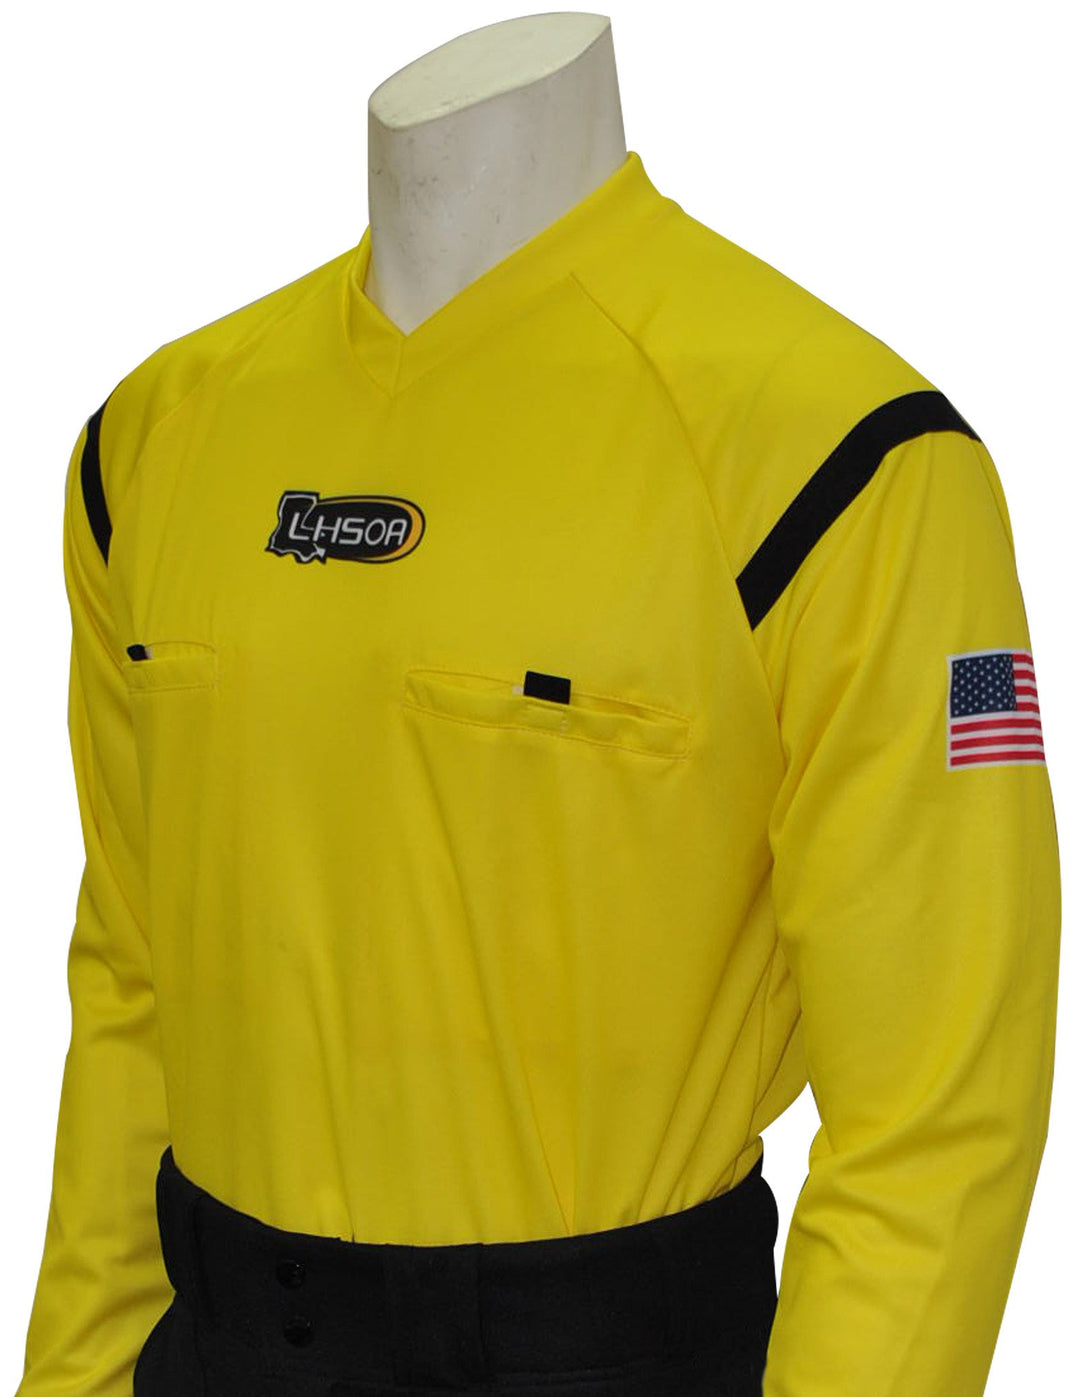 USA901LA YW - Smitty "Made in USA" - Dye Sub Louisiana Yellow Soccer Long Sleeve Shirt